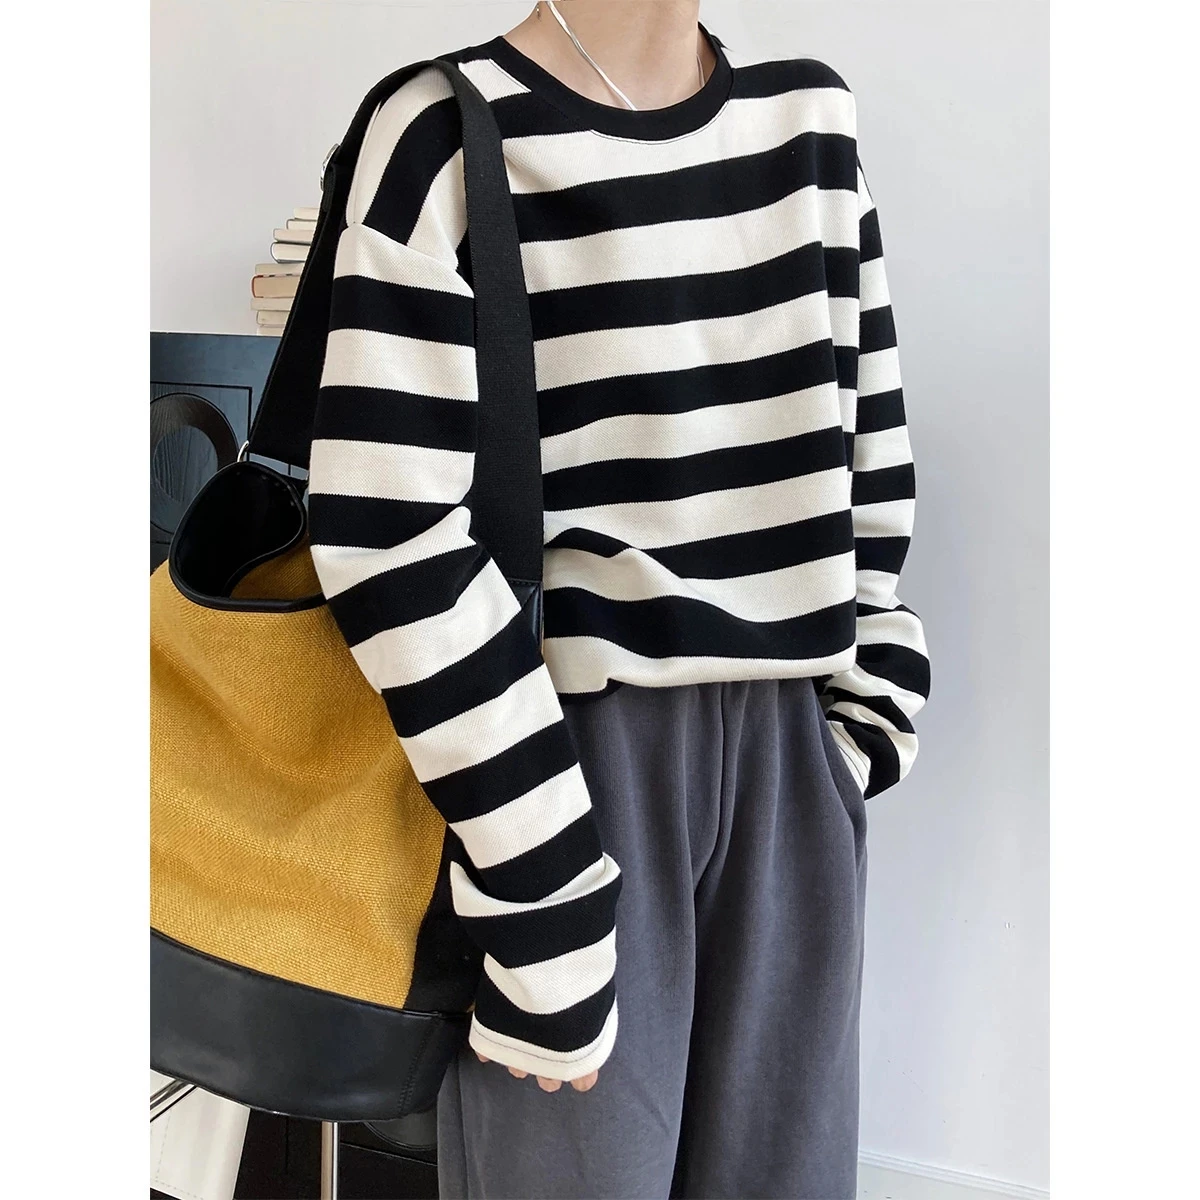 2022 Spring Black White Striped Oversize Sweatshirt Women Cotton Long Sleeve Basic Tshirt Tops